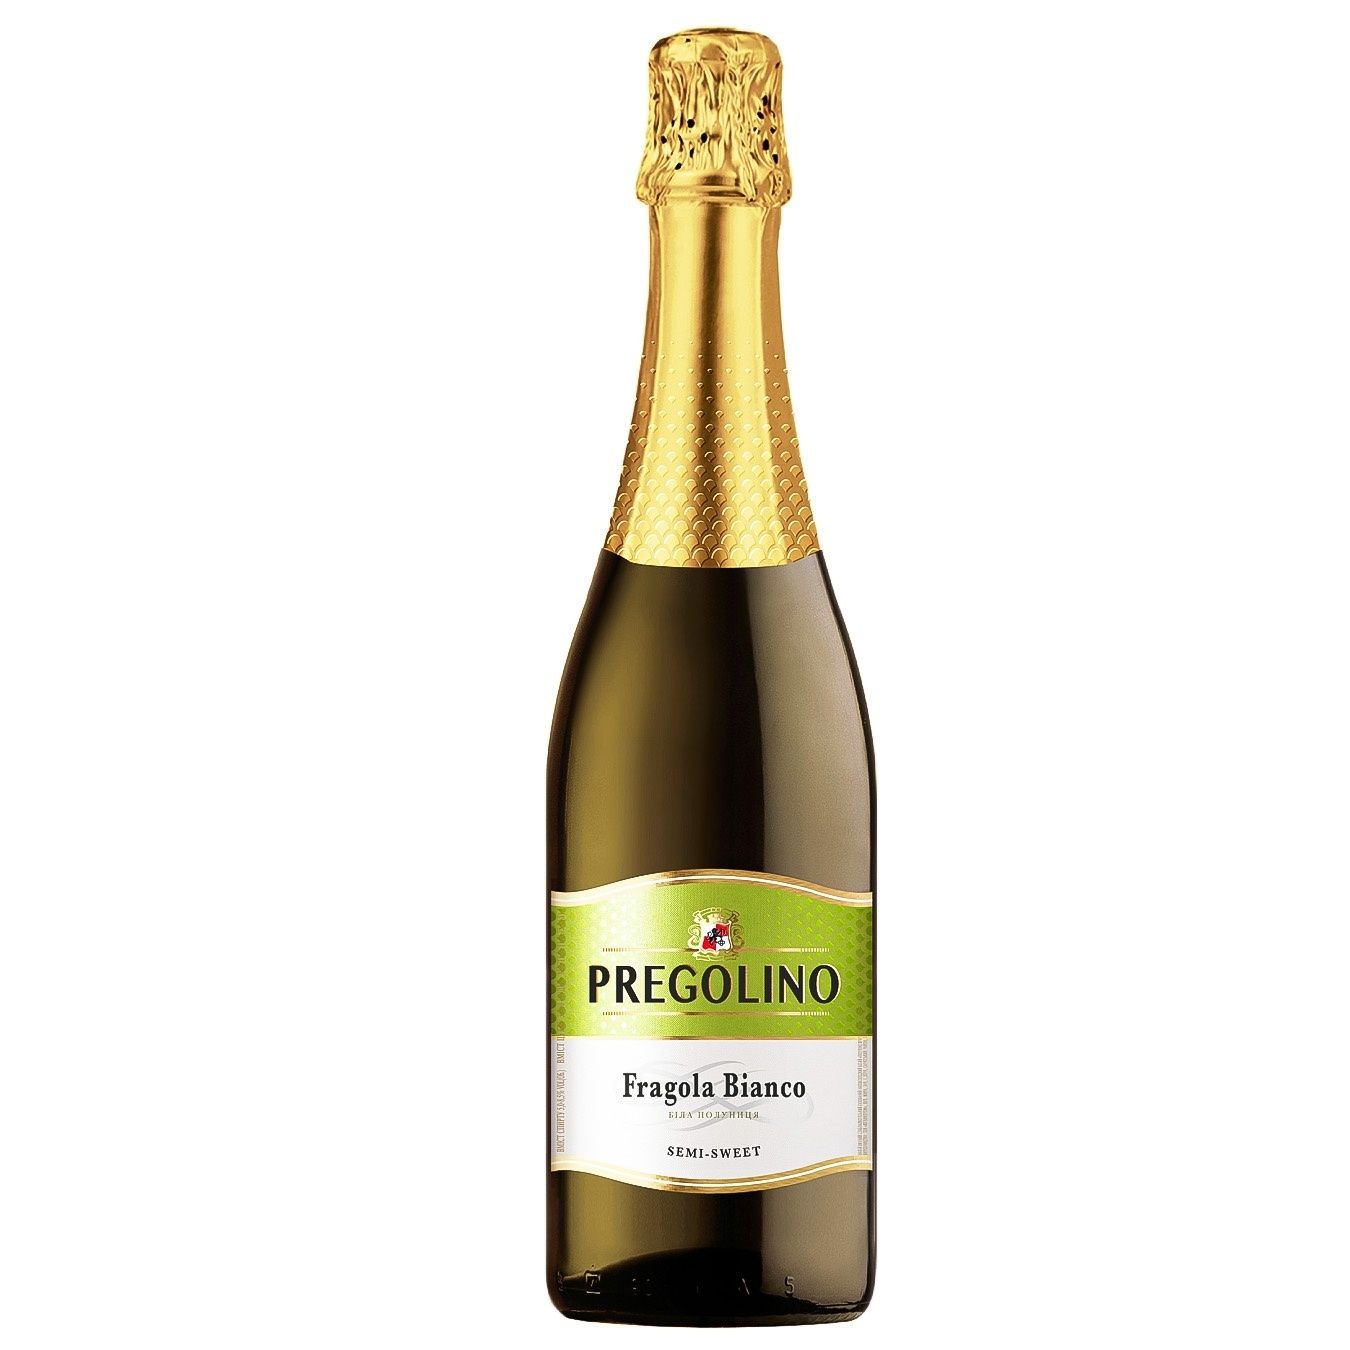 Wine drink Pregolino Fragola Bianco white semi-sweet 5-8.5% 0.75l